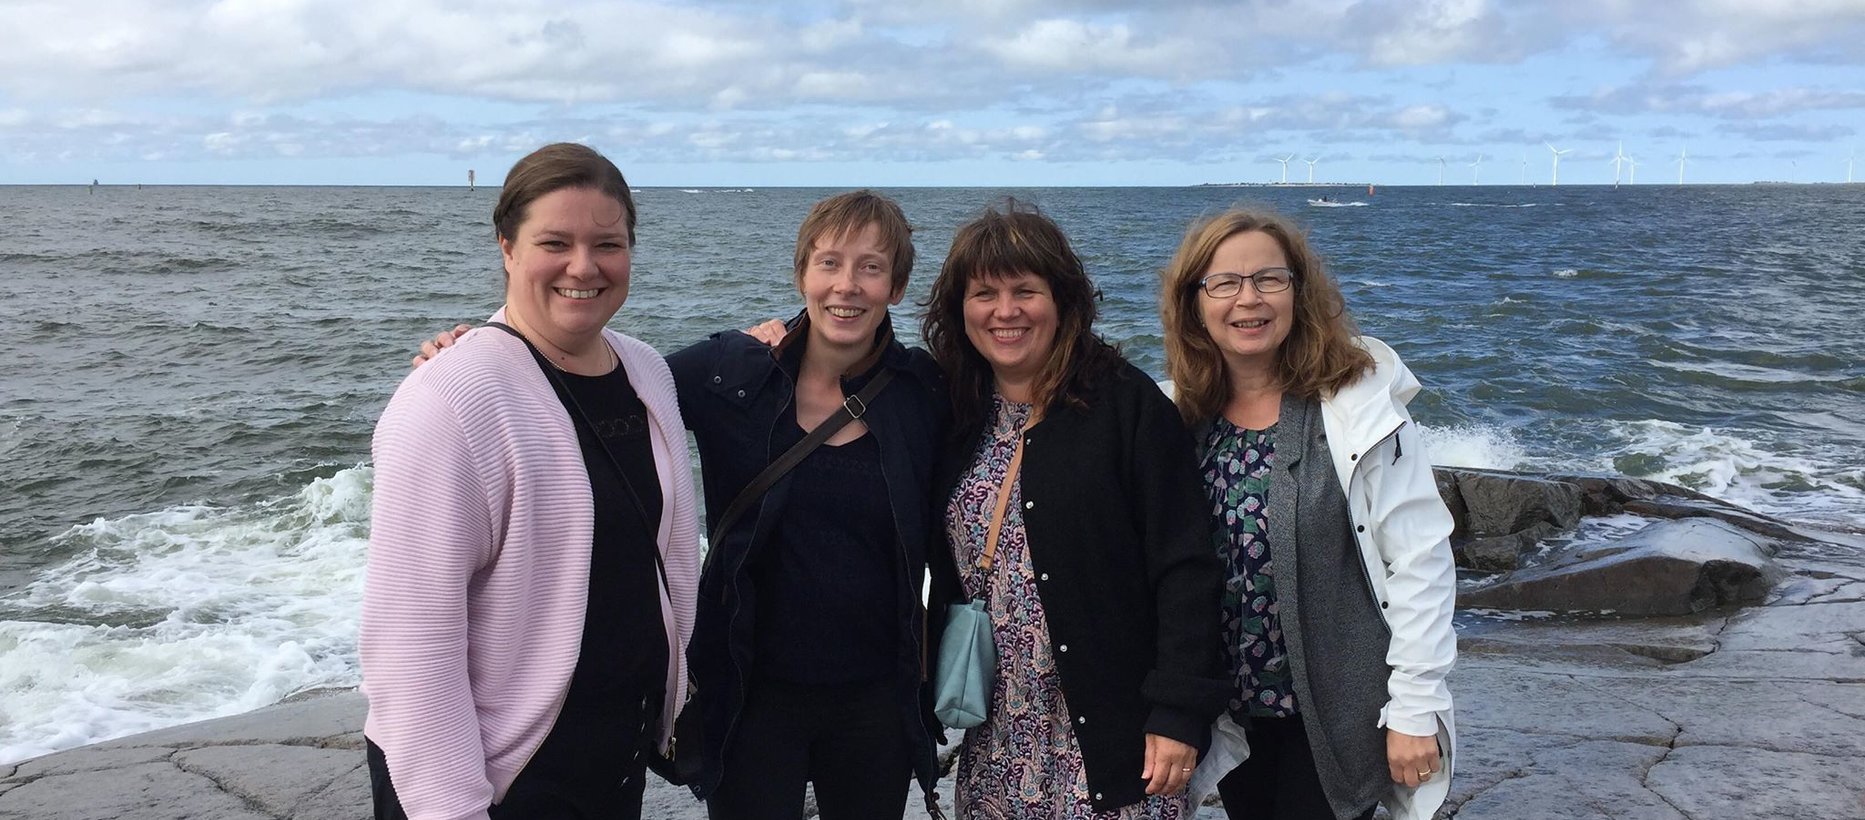 4 naista meren rannalla vieretysten.